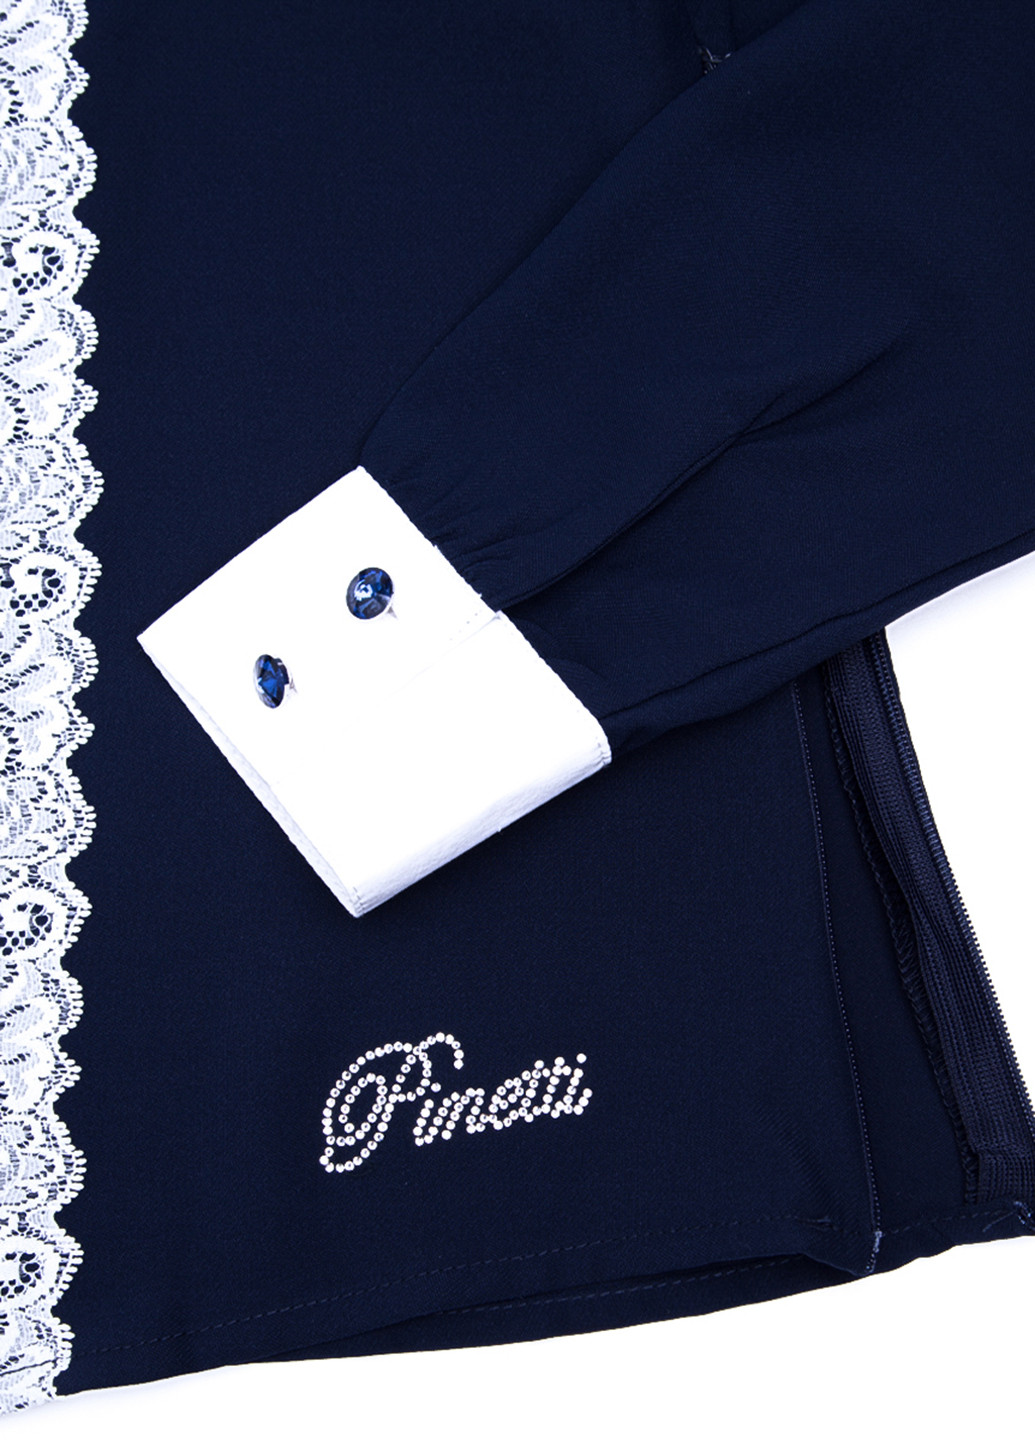 Синяя блузка с длинным рукавом Pinetti демисезонная